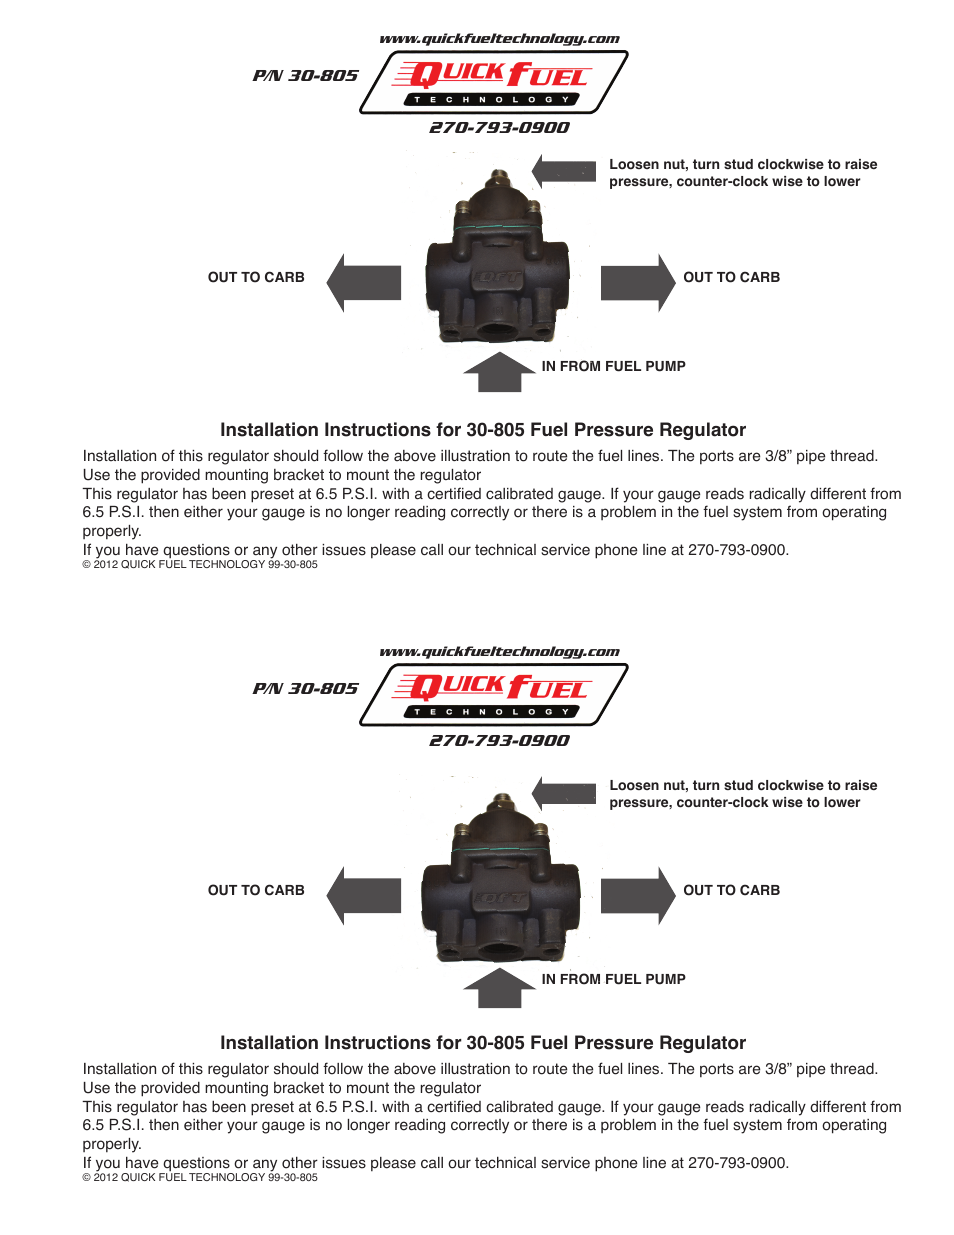 30-805 Fuel Pressure Regulator